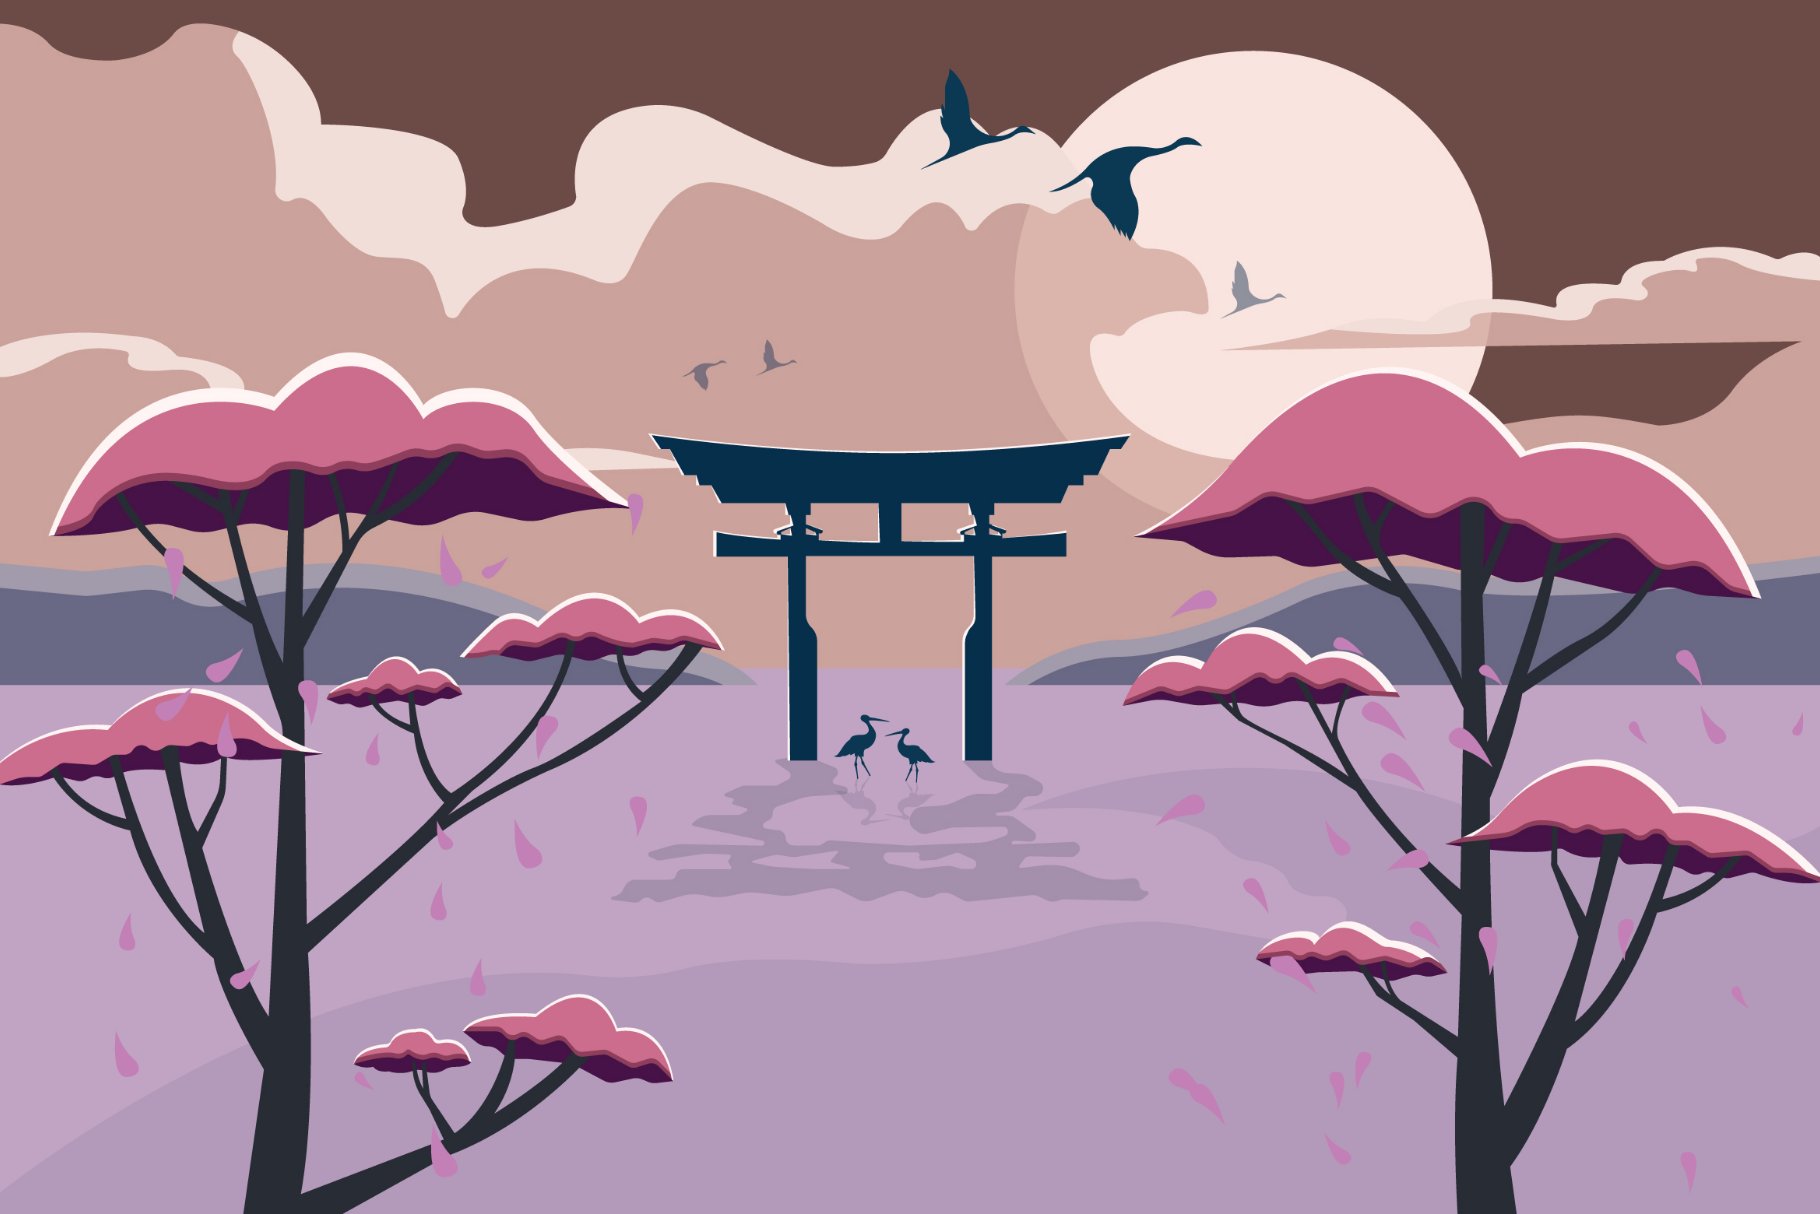 Storks at Sunset-Vector Illustration cover image.